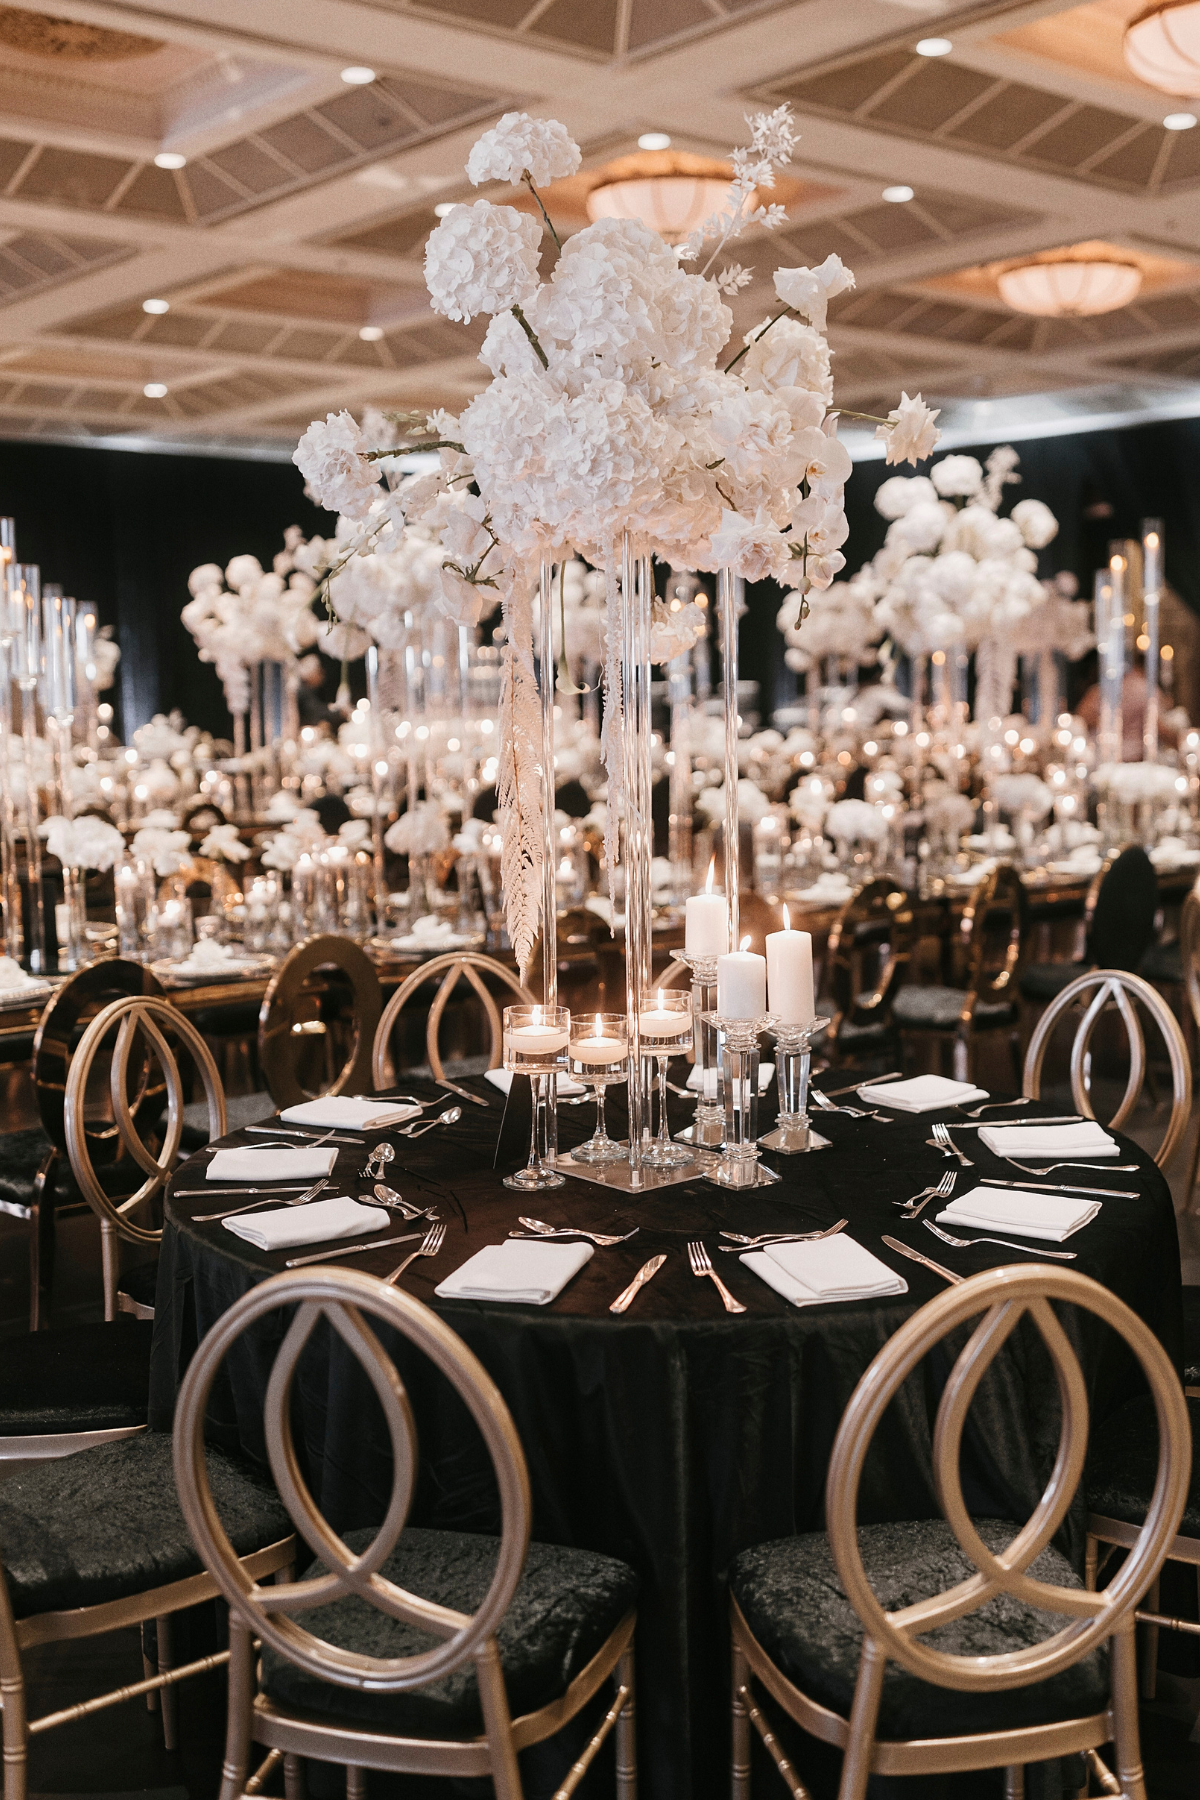 kavita-mohan-black-white-reception-candles-flowers-chair-napkin-hydrangea